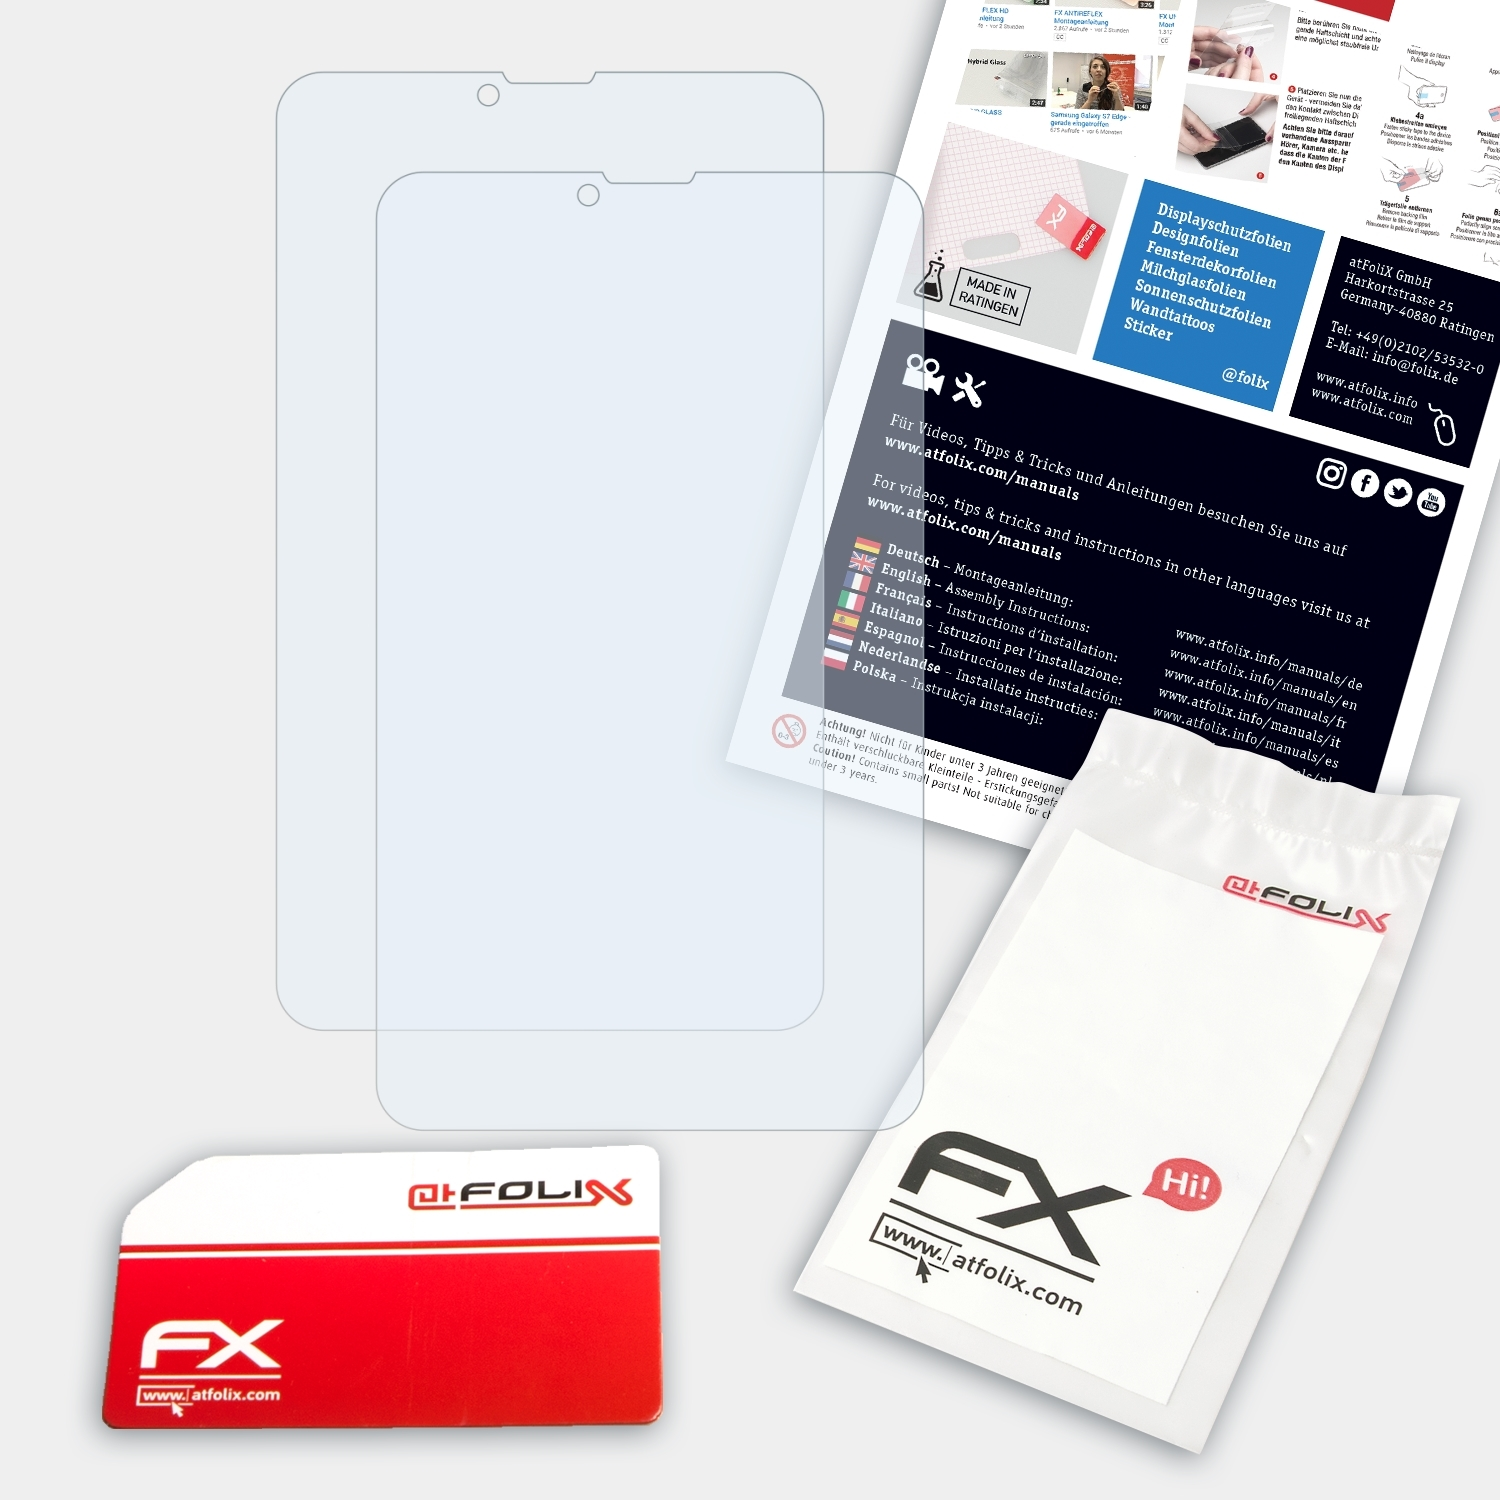 Mediacom SmartPad ATFOLIX Mx 2x 7) Displayschutz(für FX-Clear